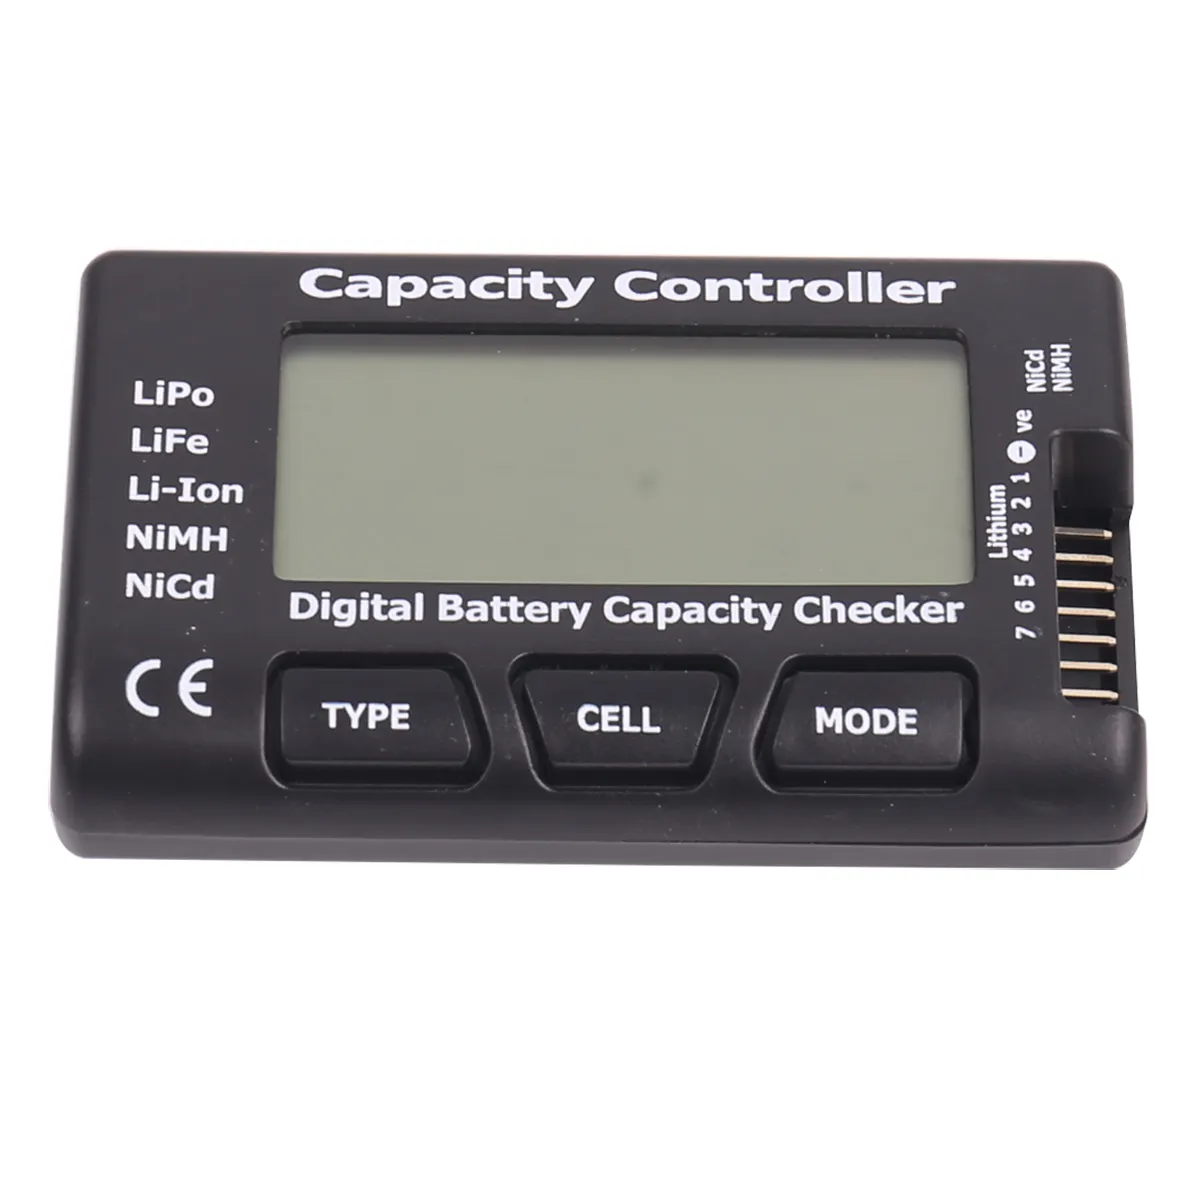 CellMeter7 V2 with balance function Digital Battery Capacity Checker voltage meter cellmeter-7 for LiPo/LiFe/Li-ion 2-7S 0.001V